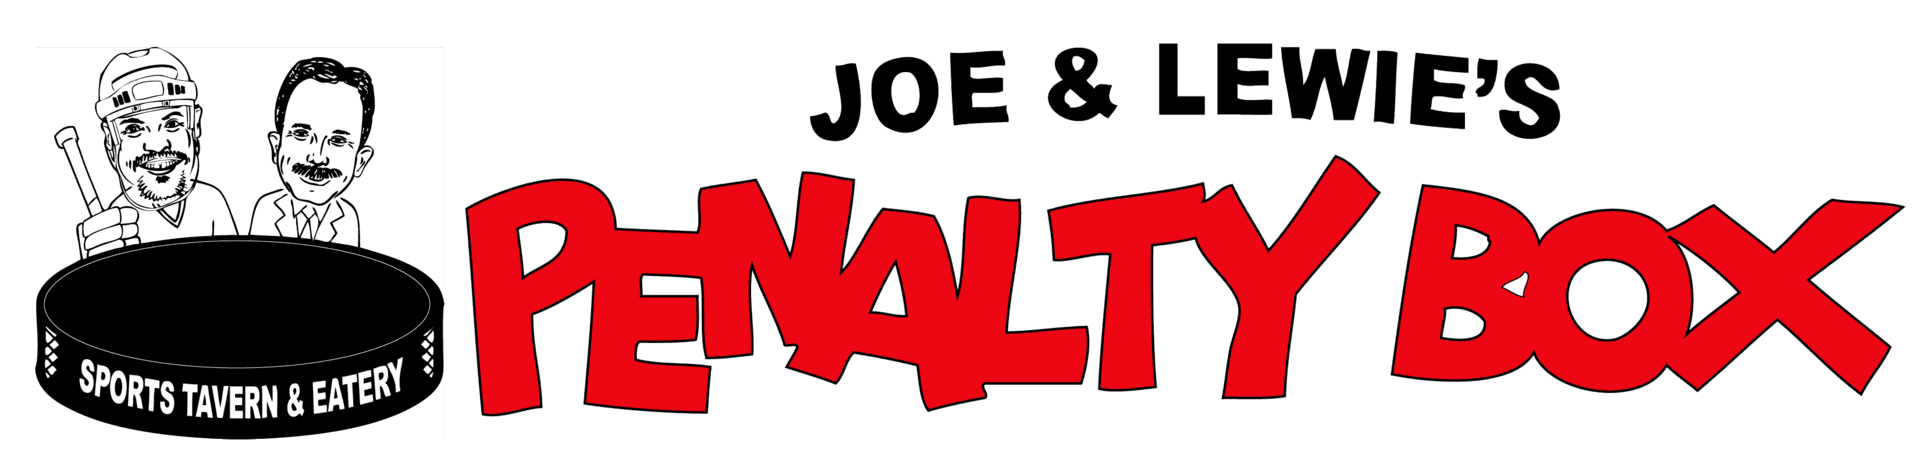 Joe & Lewie's Penalty Box Restaurant Logo